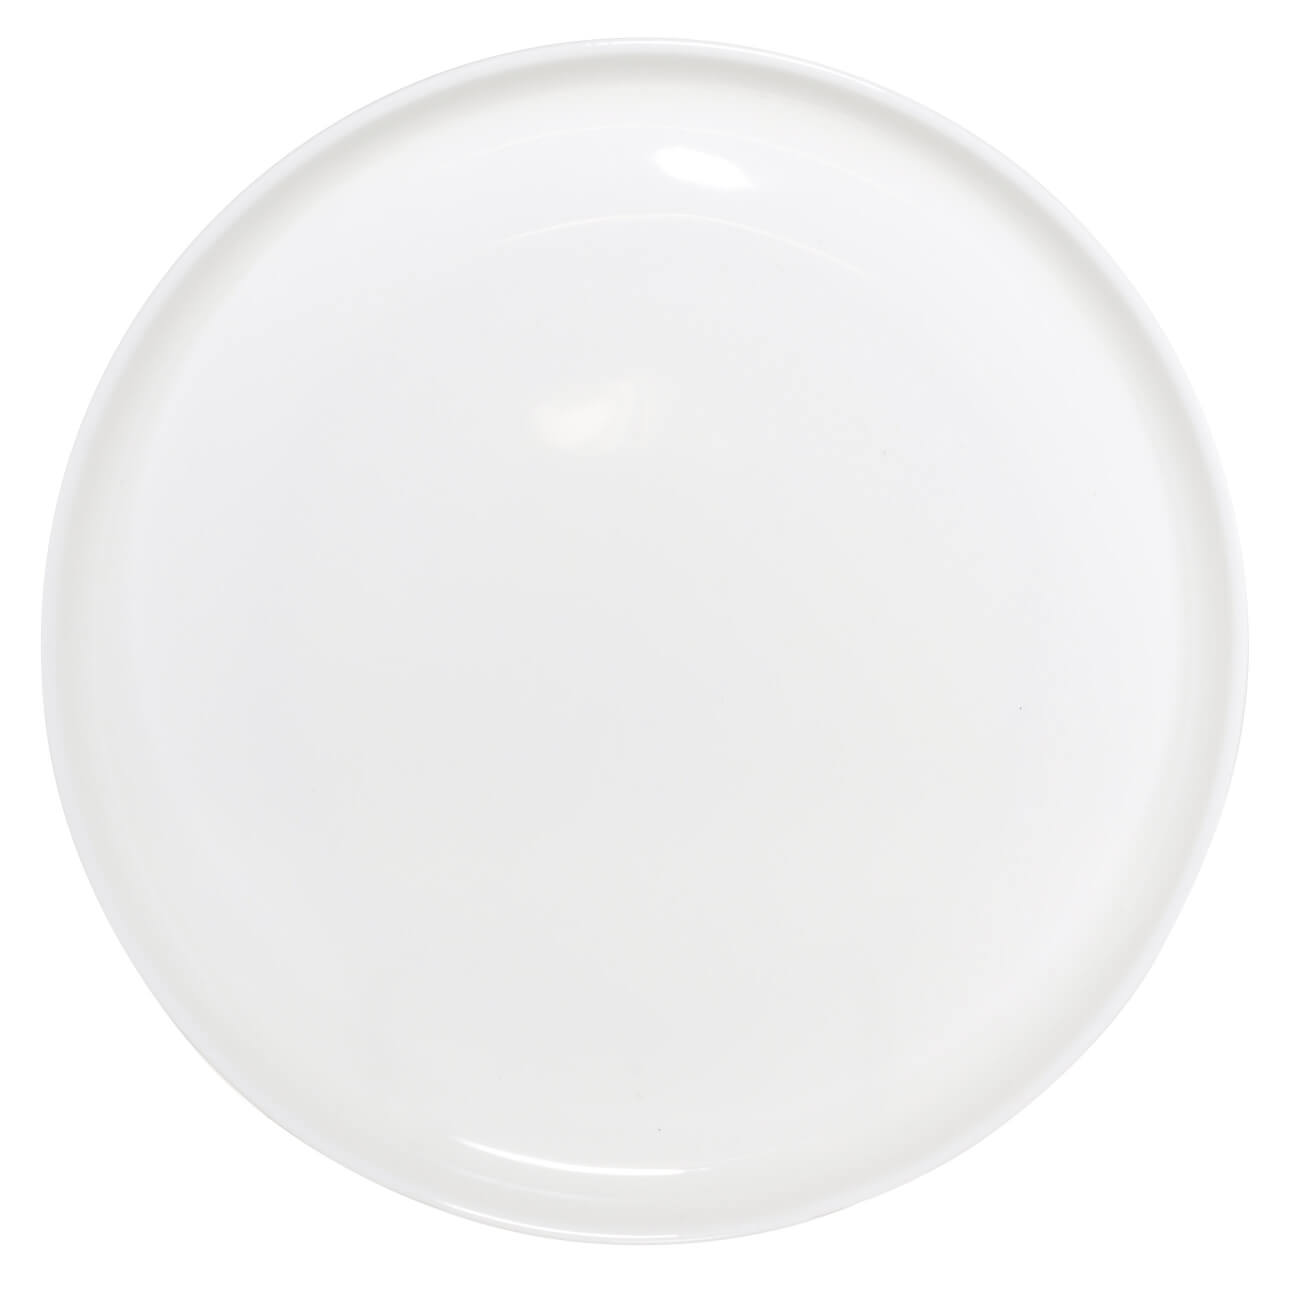 Тарелка обеденная, 26 см, фарфор F, белая, Ideal white обеденная тарелка walmer